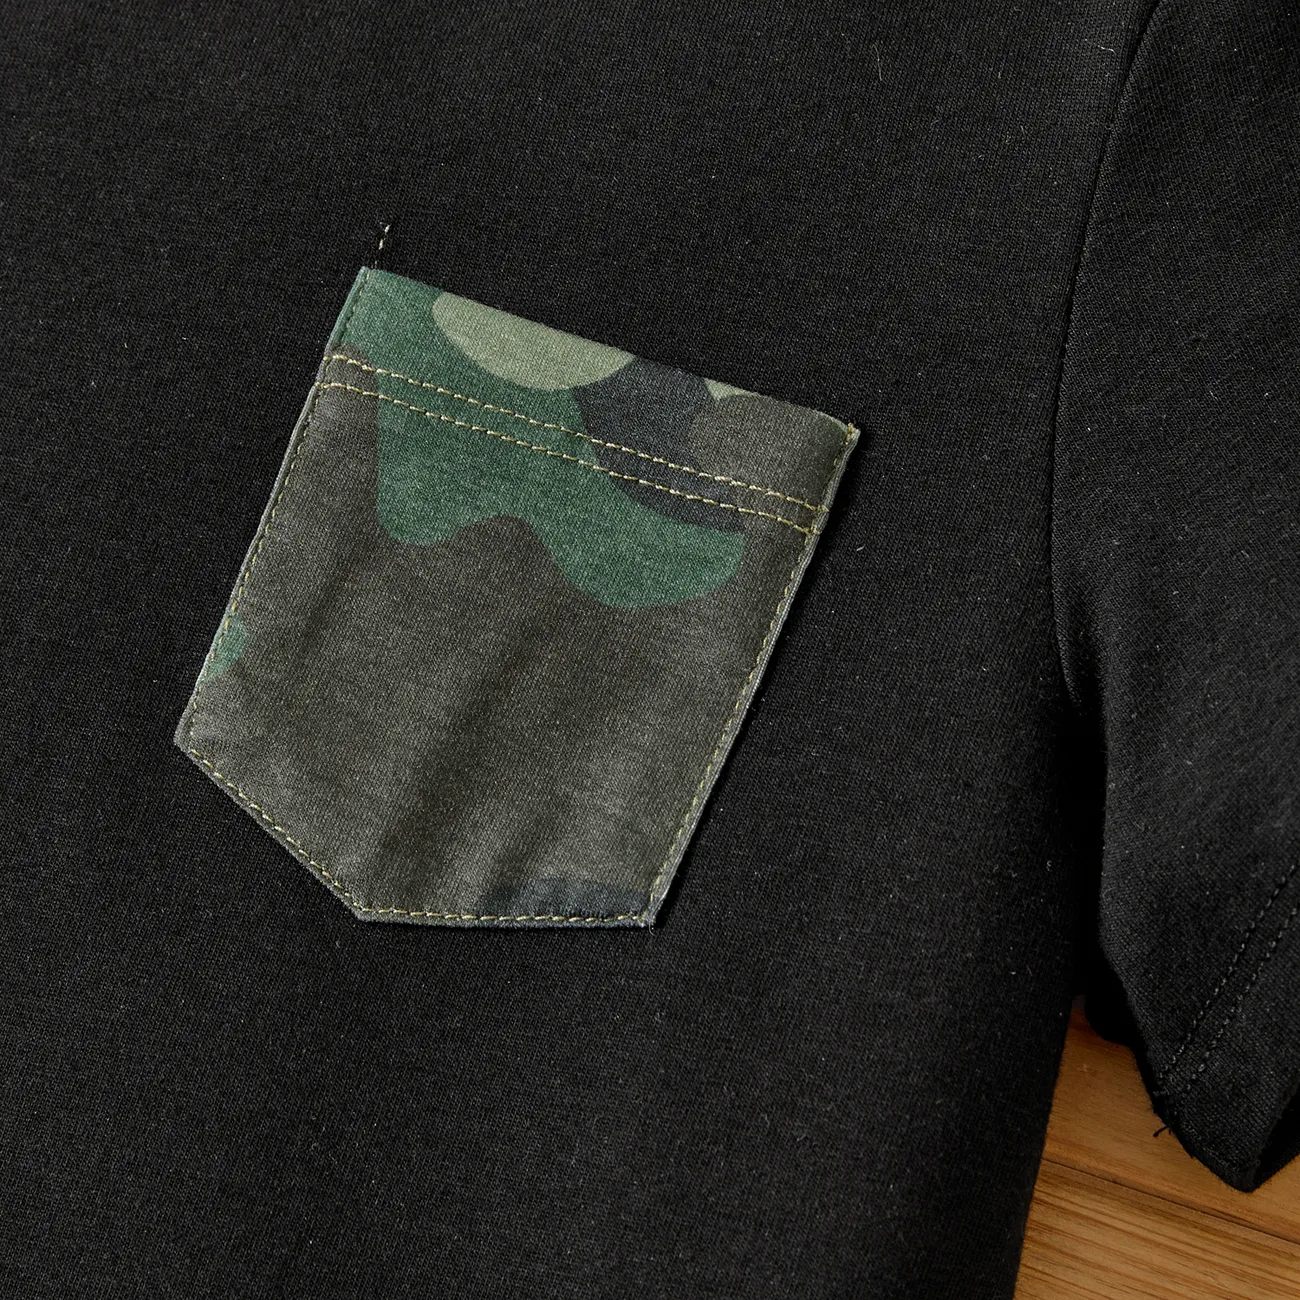 Naia 2pcs Toddler/Kid Boy Pocket Design Short-sleeve Tee and Camouflage Print Shorts Set Black big image 1